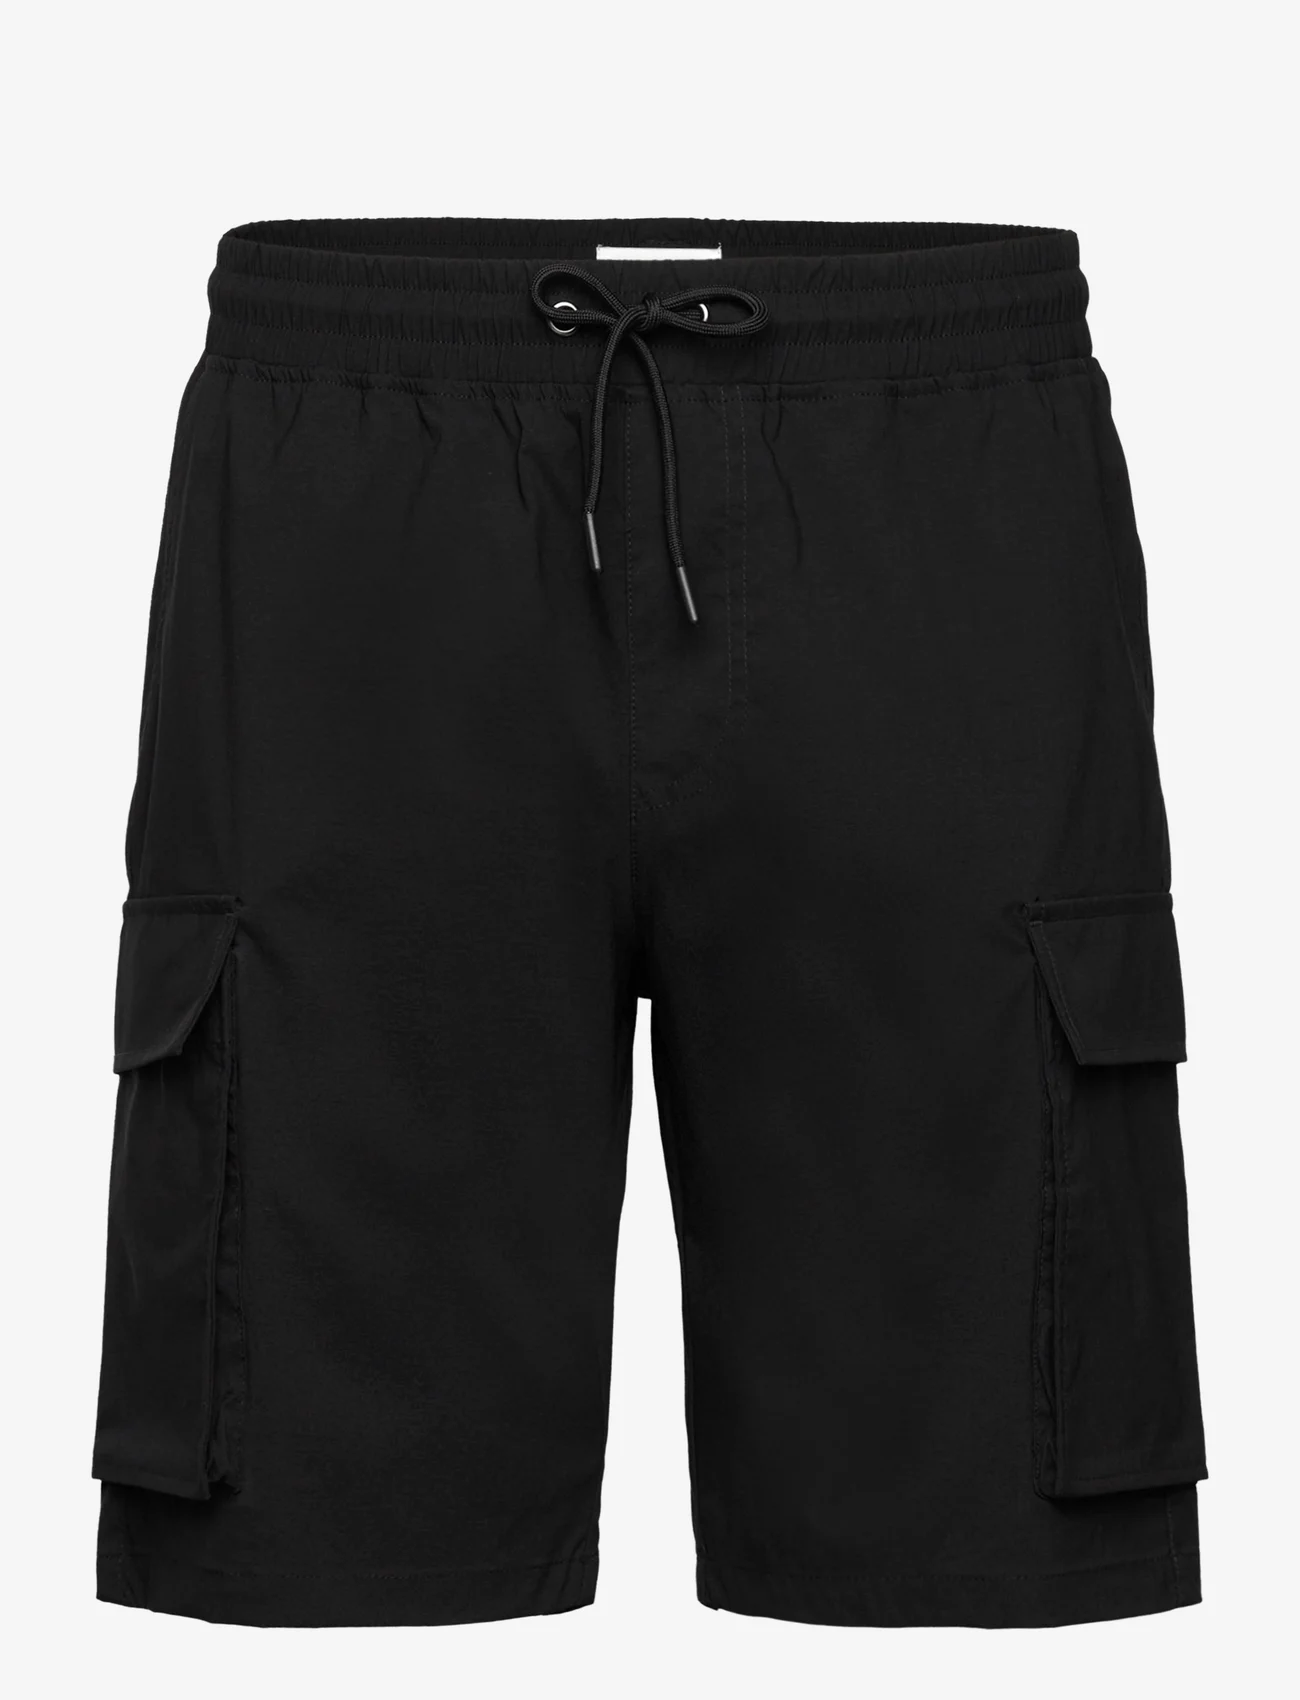 Resteröds - Cargo Shorts Lightweight - shorts - no color name - 0